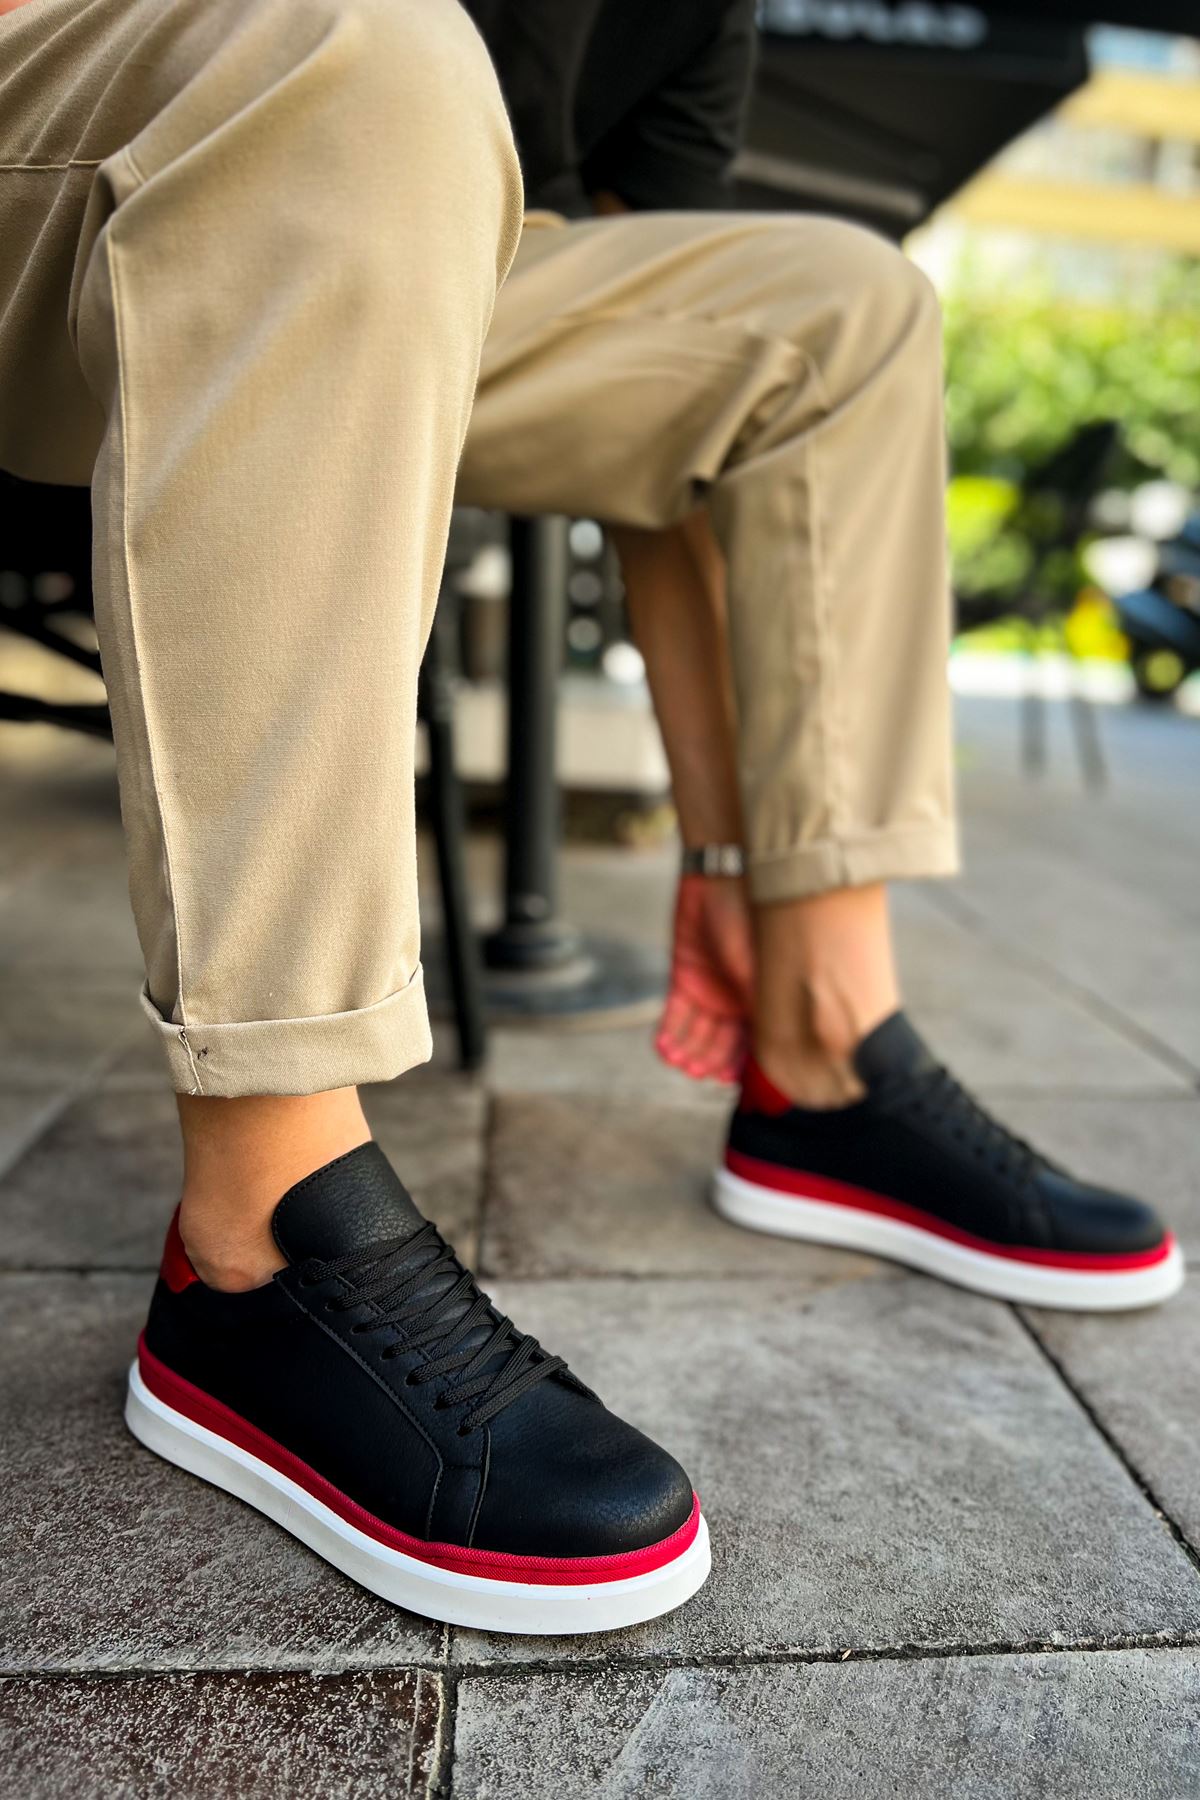 CH979 Santoni GBT Sport Men's Sneakers Shoes BLACK/RED - STREETMODE™